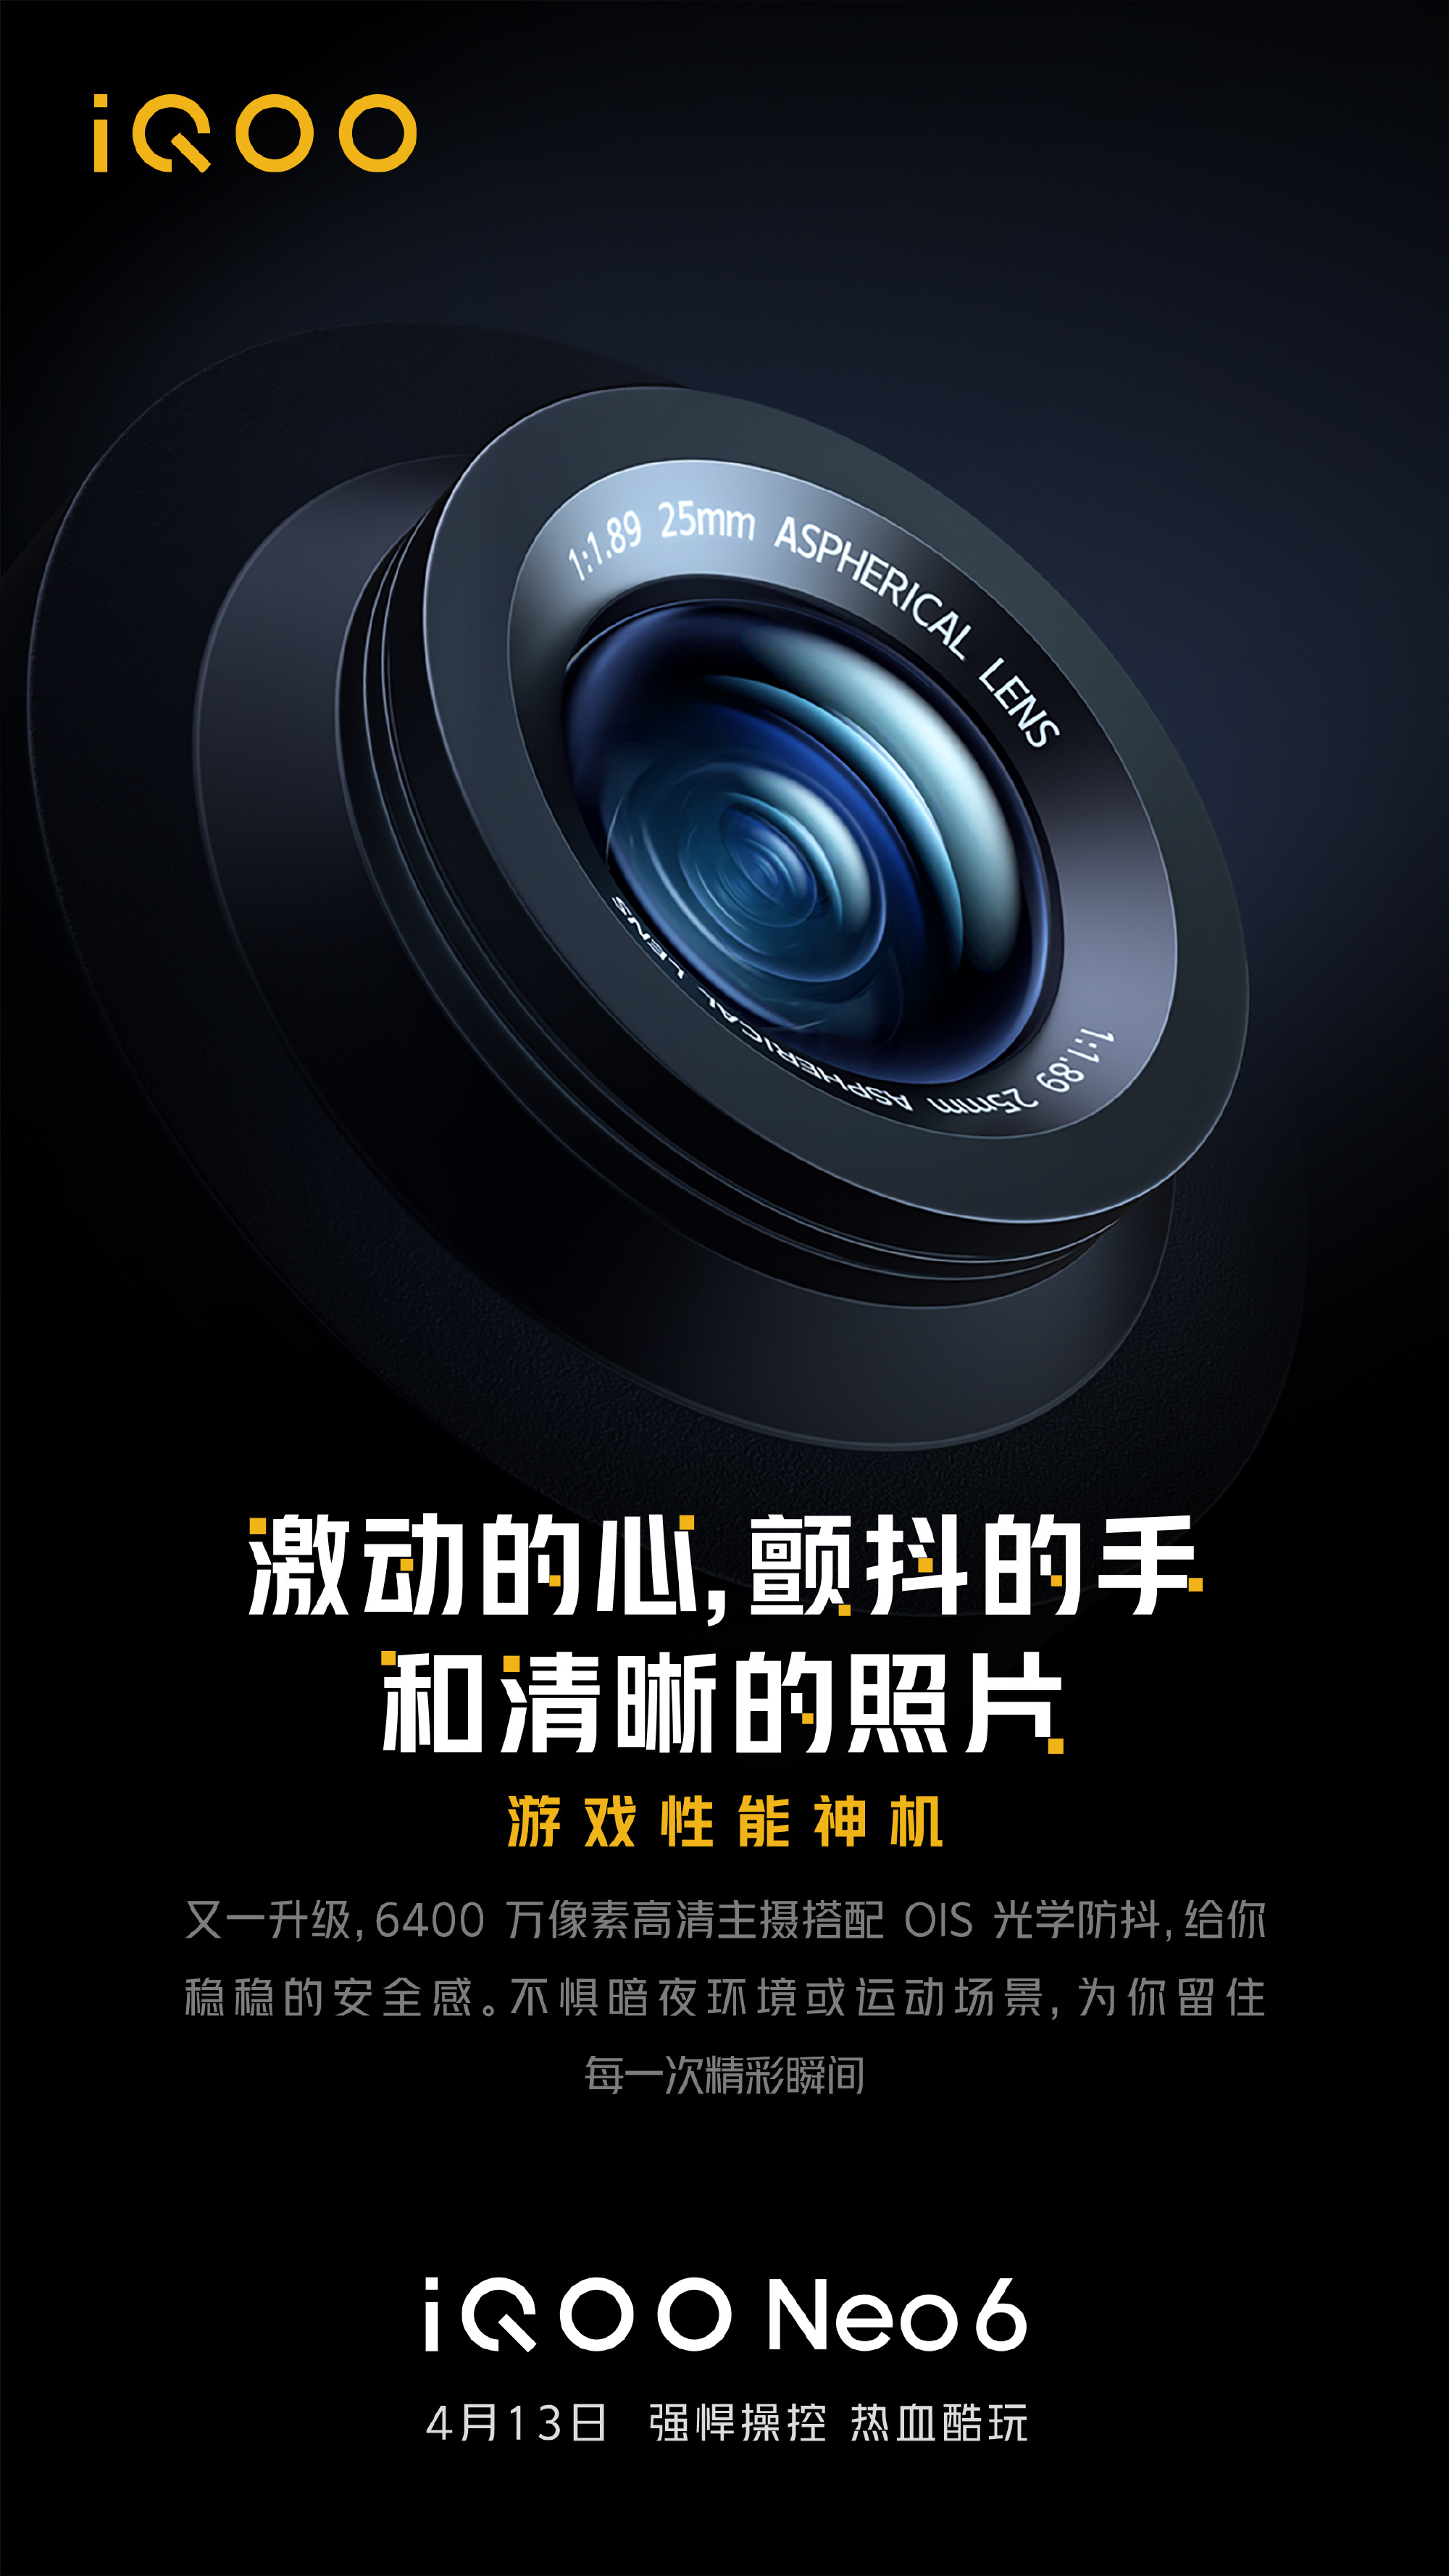 iQOO Neo6 64MP camera with OIS